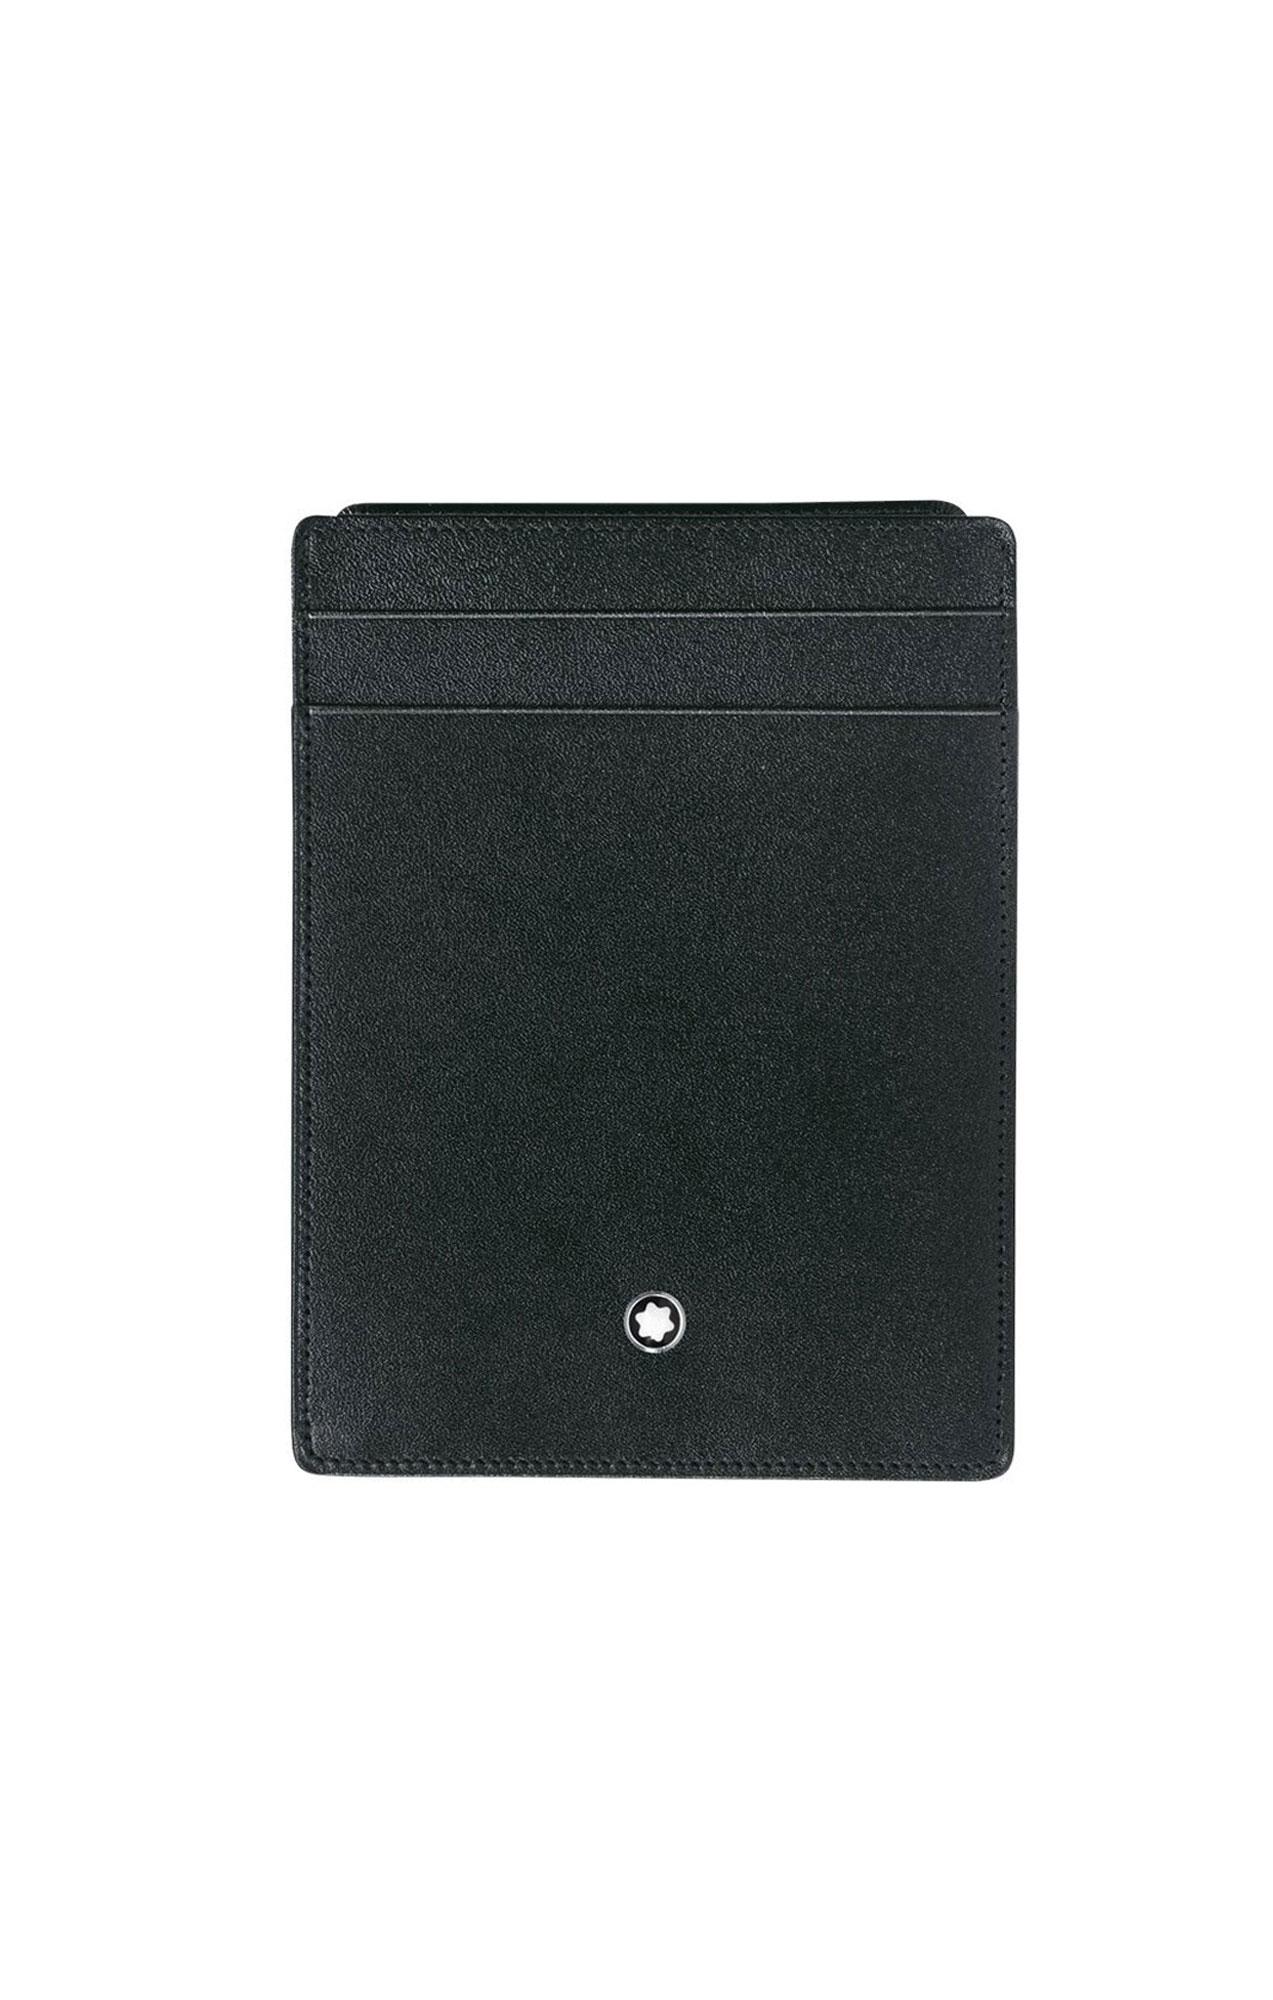 Montblanc Meisterstück Pocket 4cc with ID Card Holder